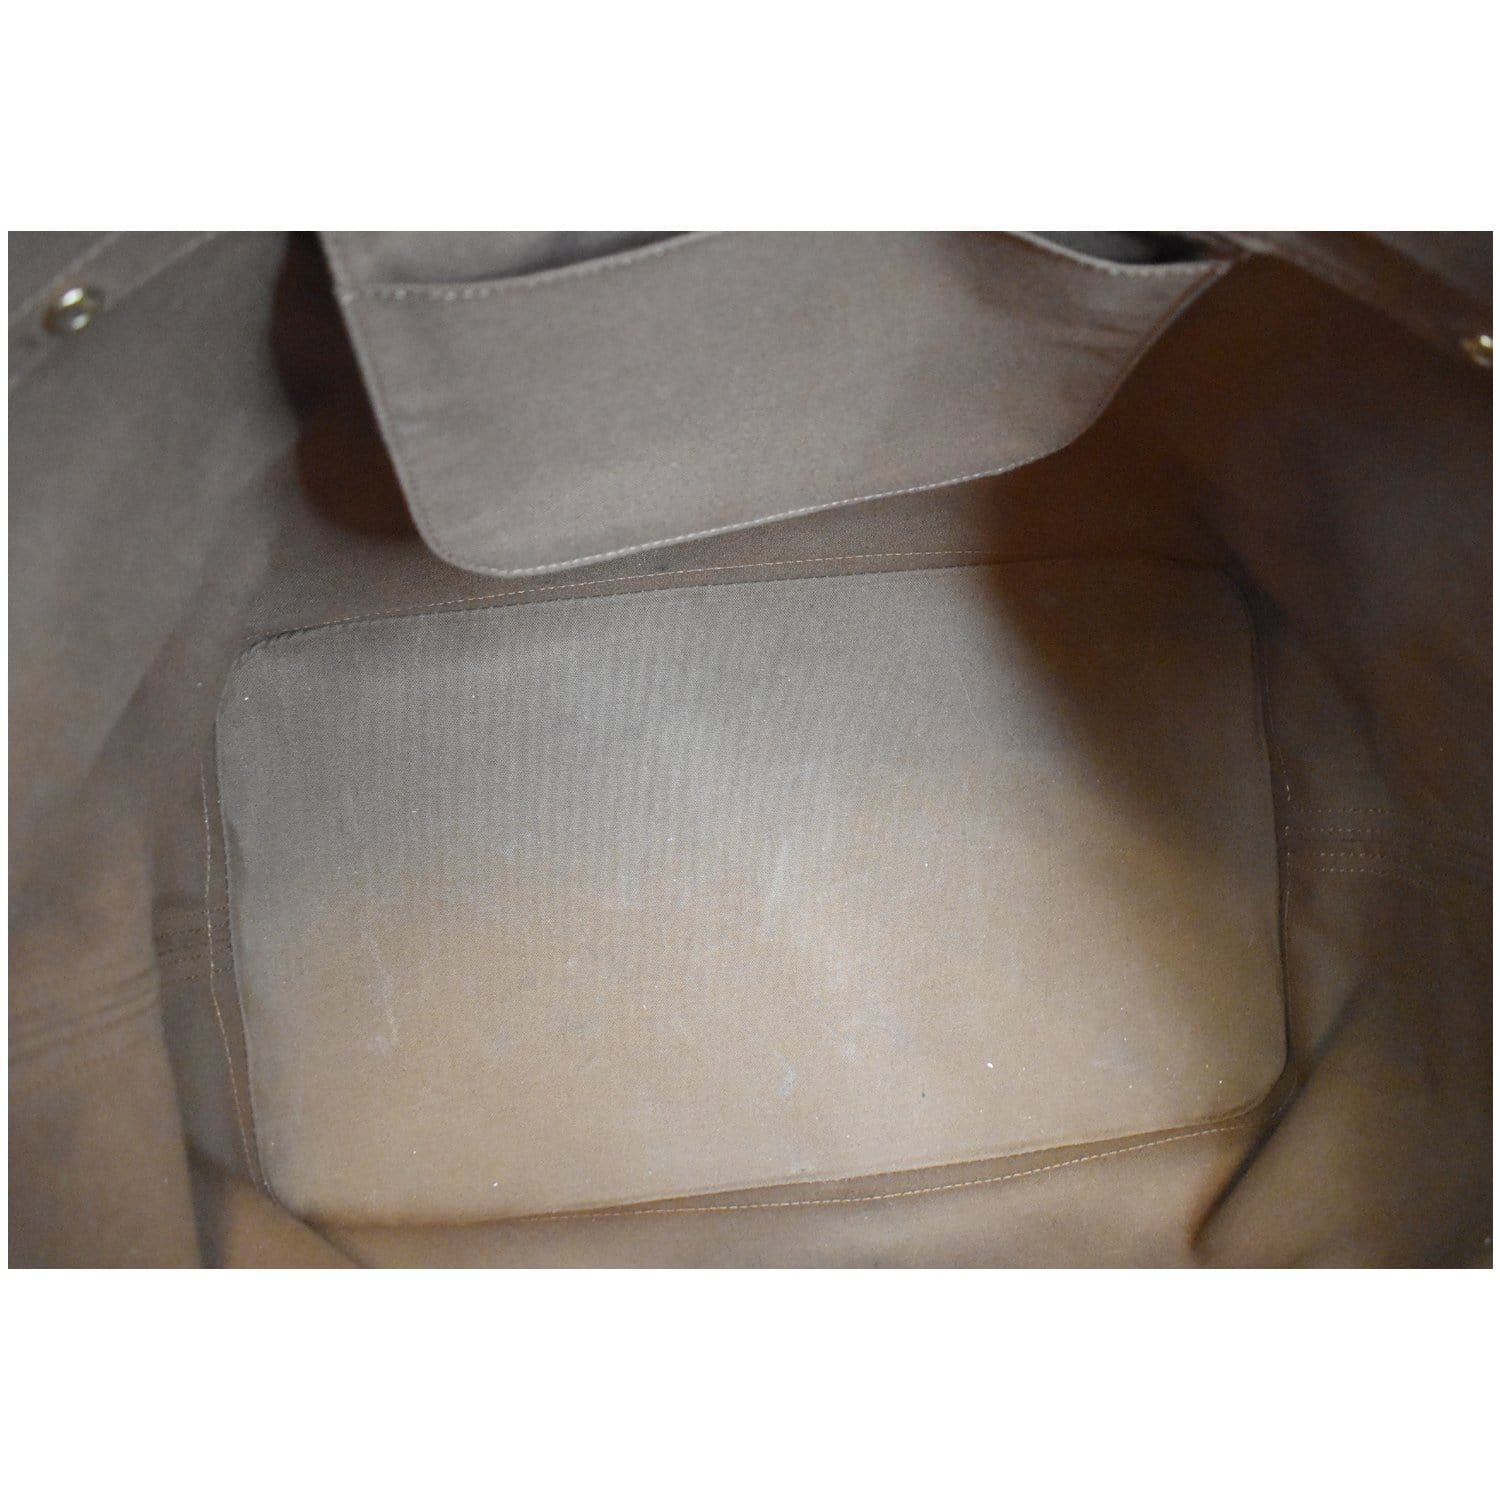 Louis Vuitton Cruiser Travel bag 334665